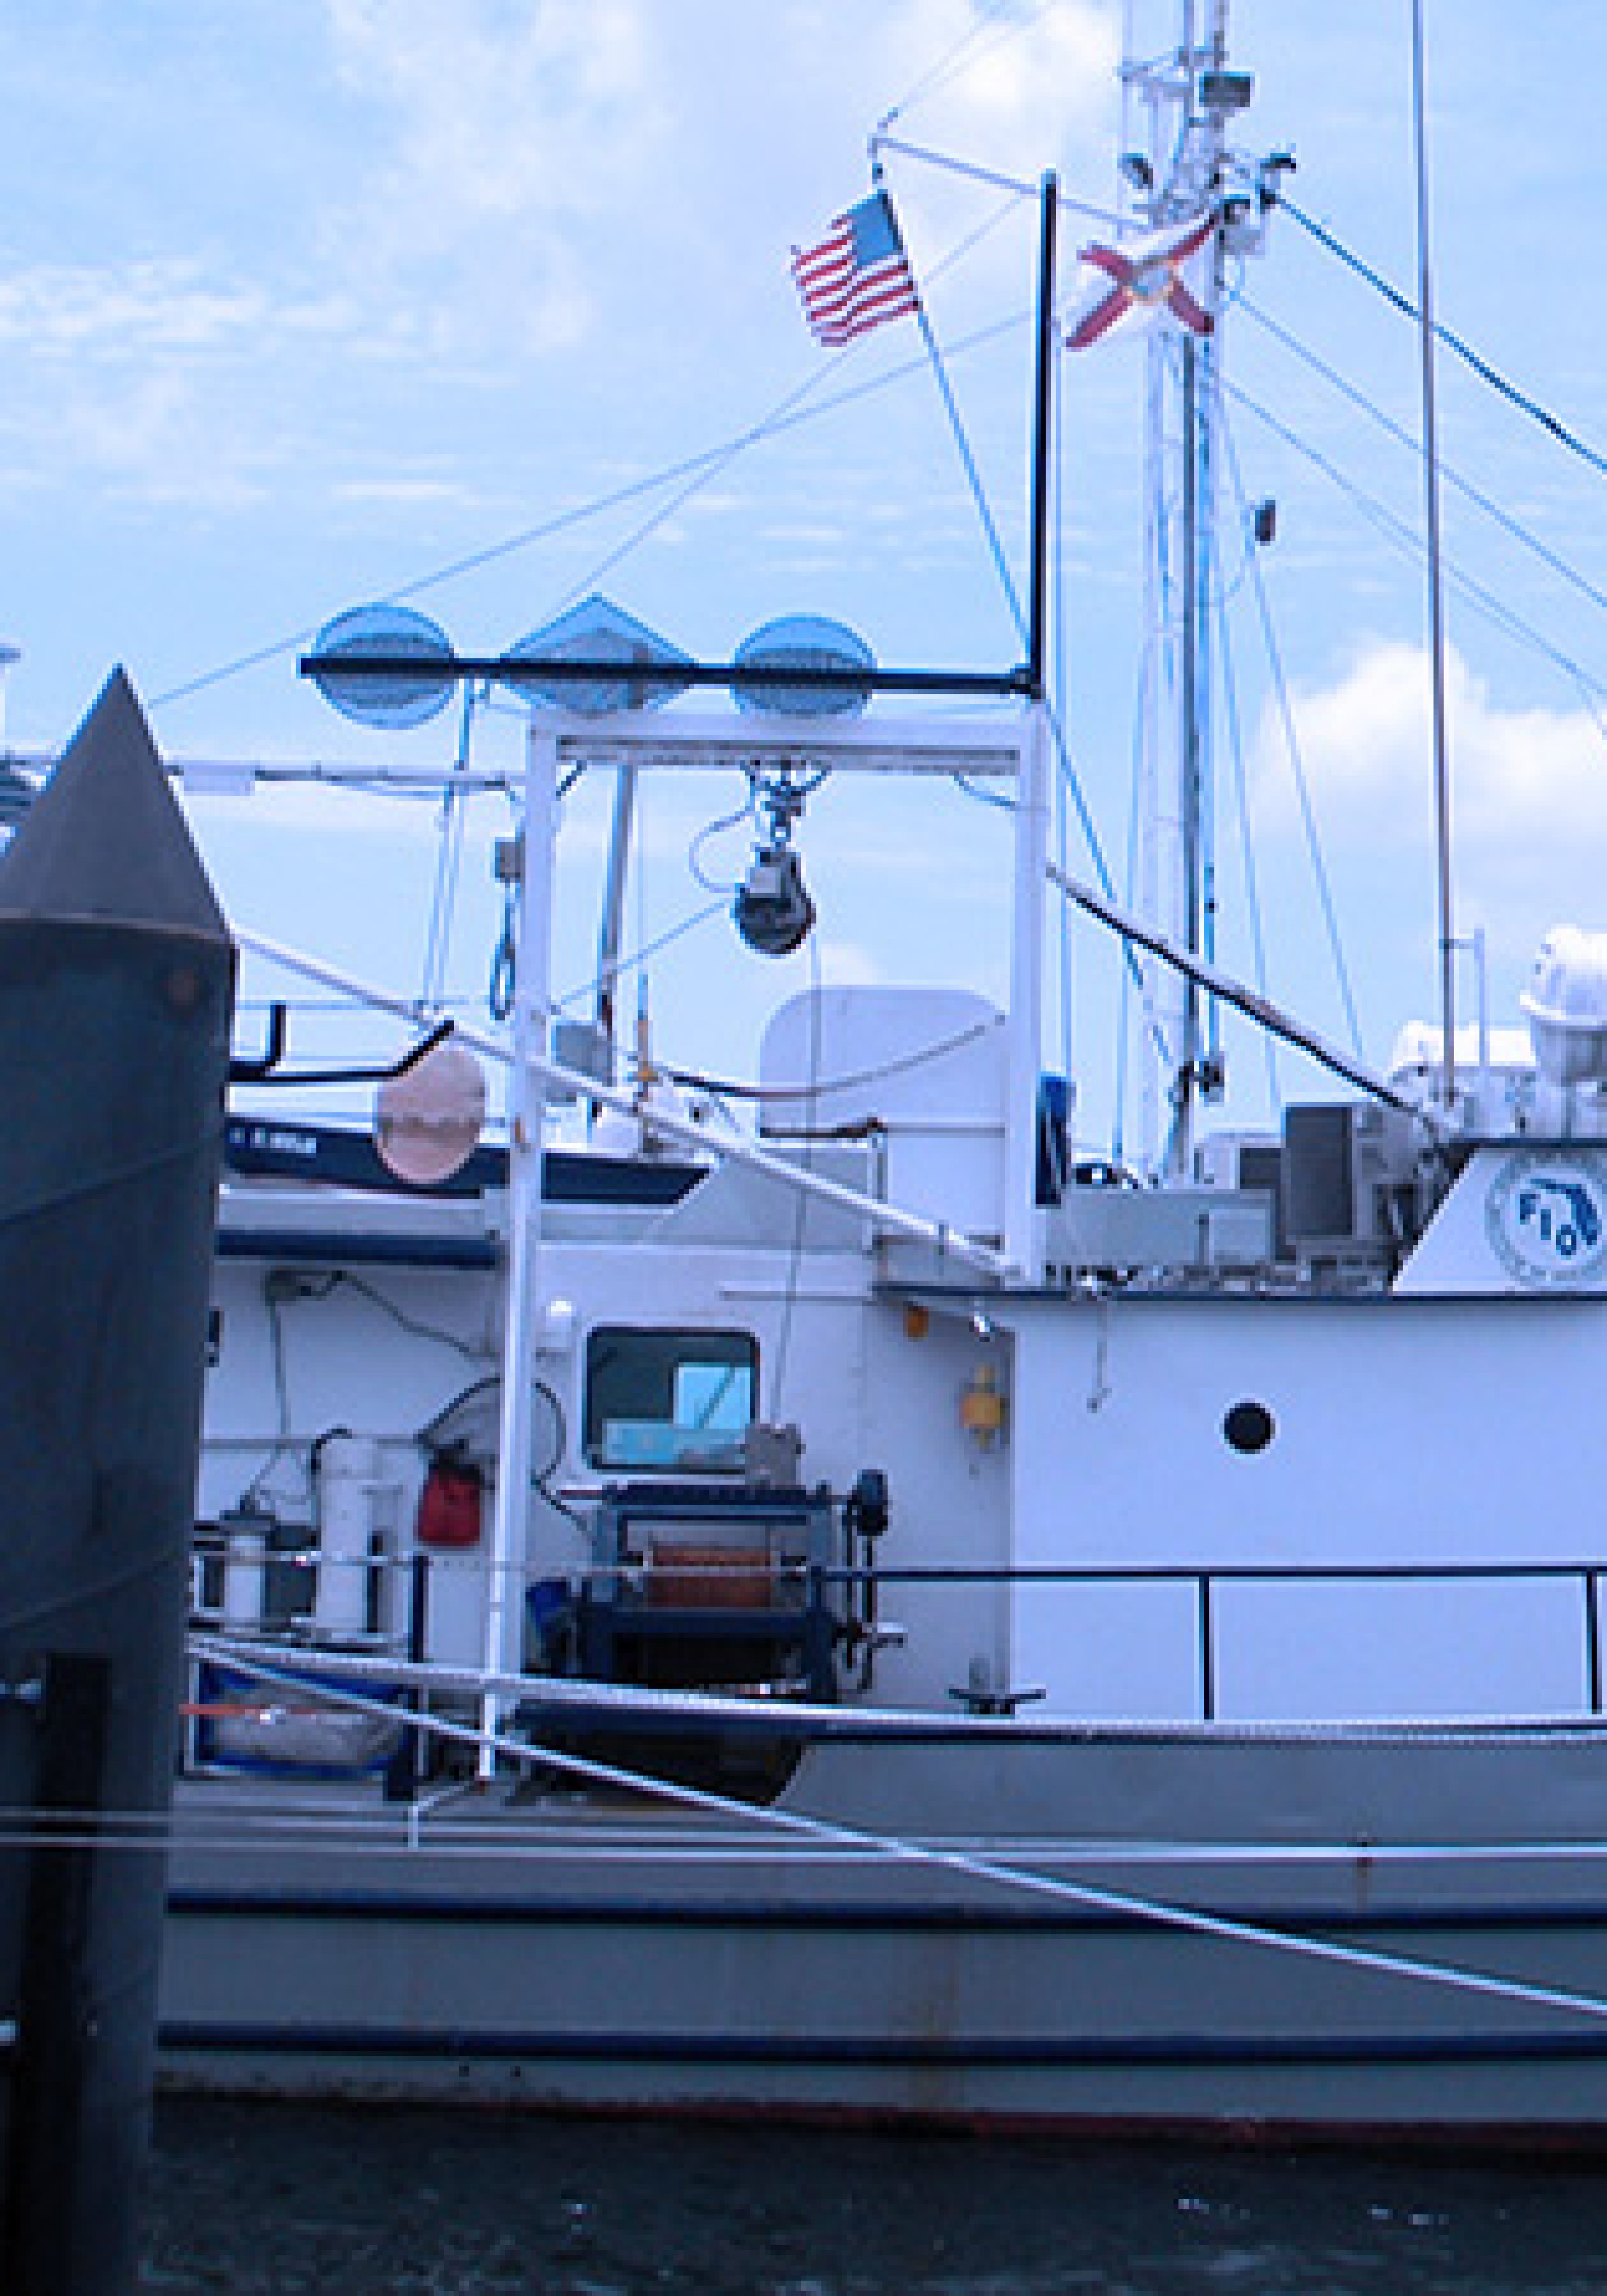 r-v-bellows-research-vessel-3500x5000.jpg